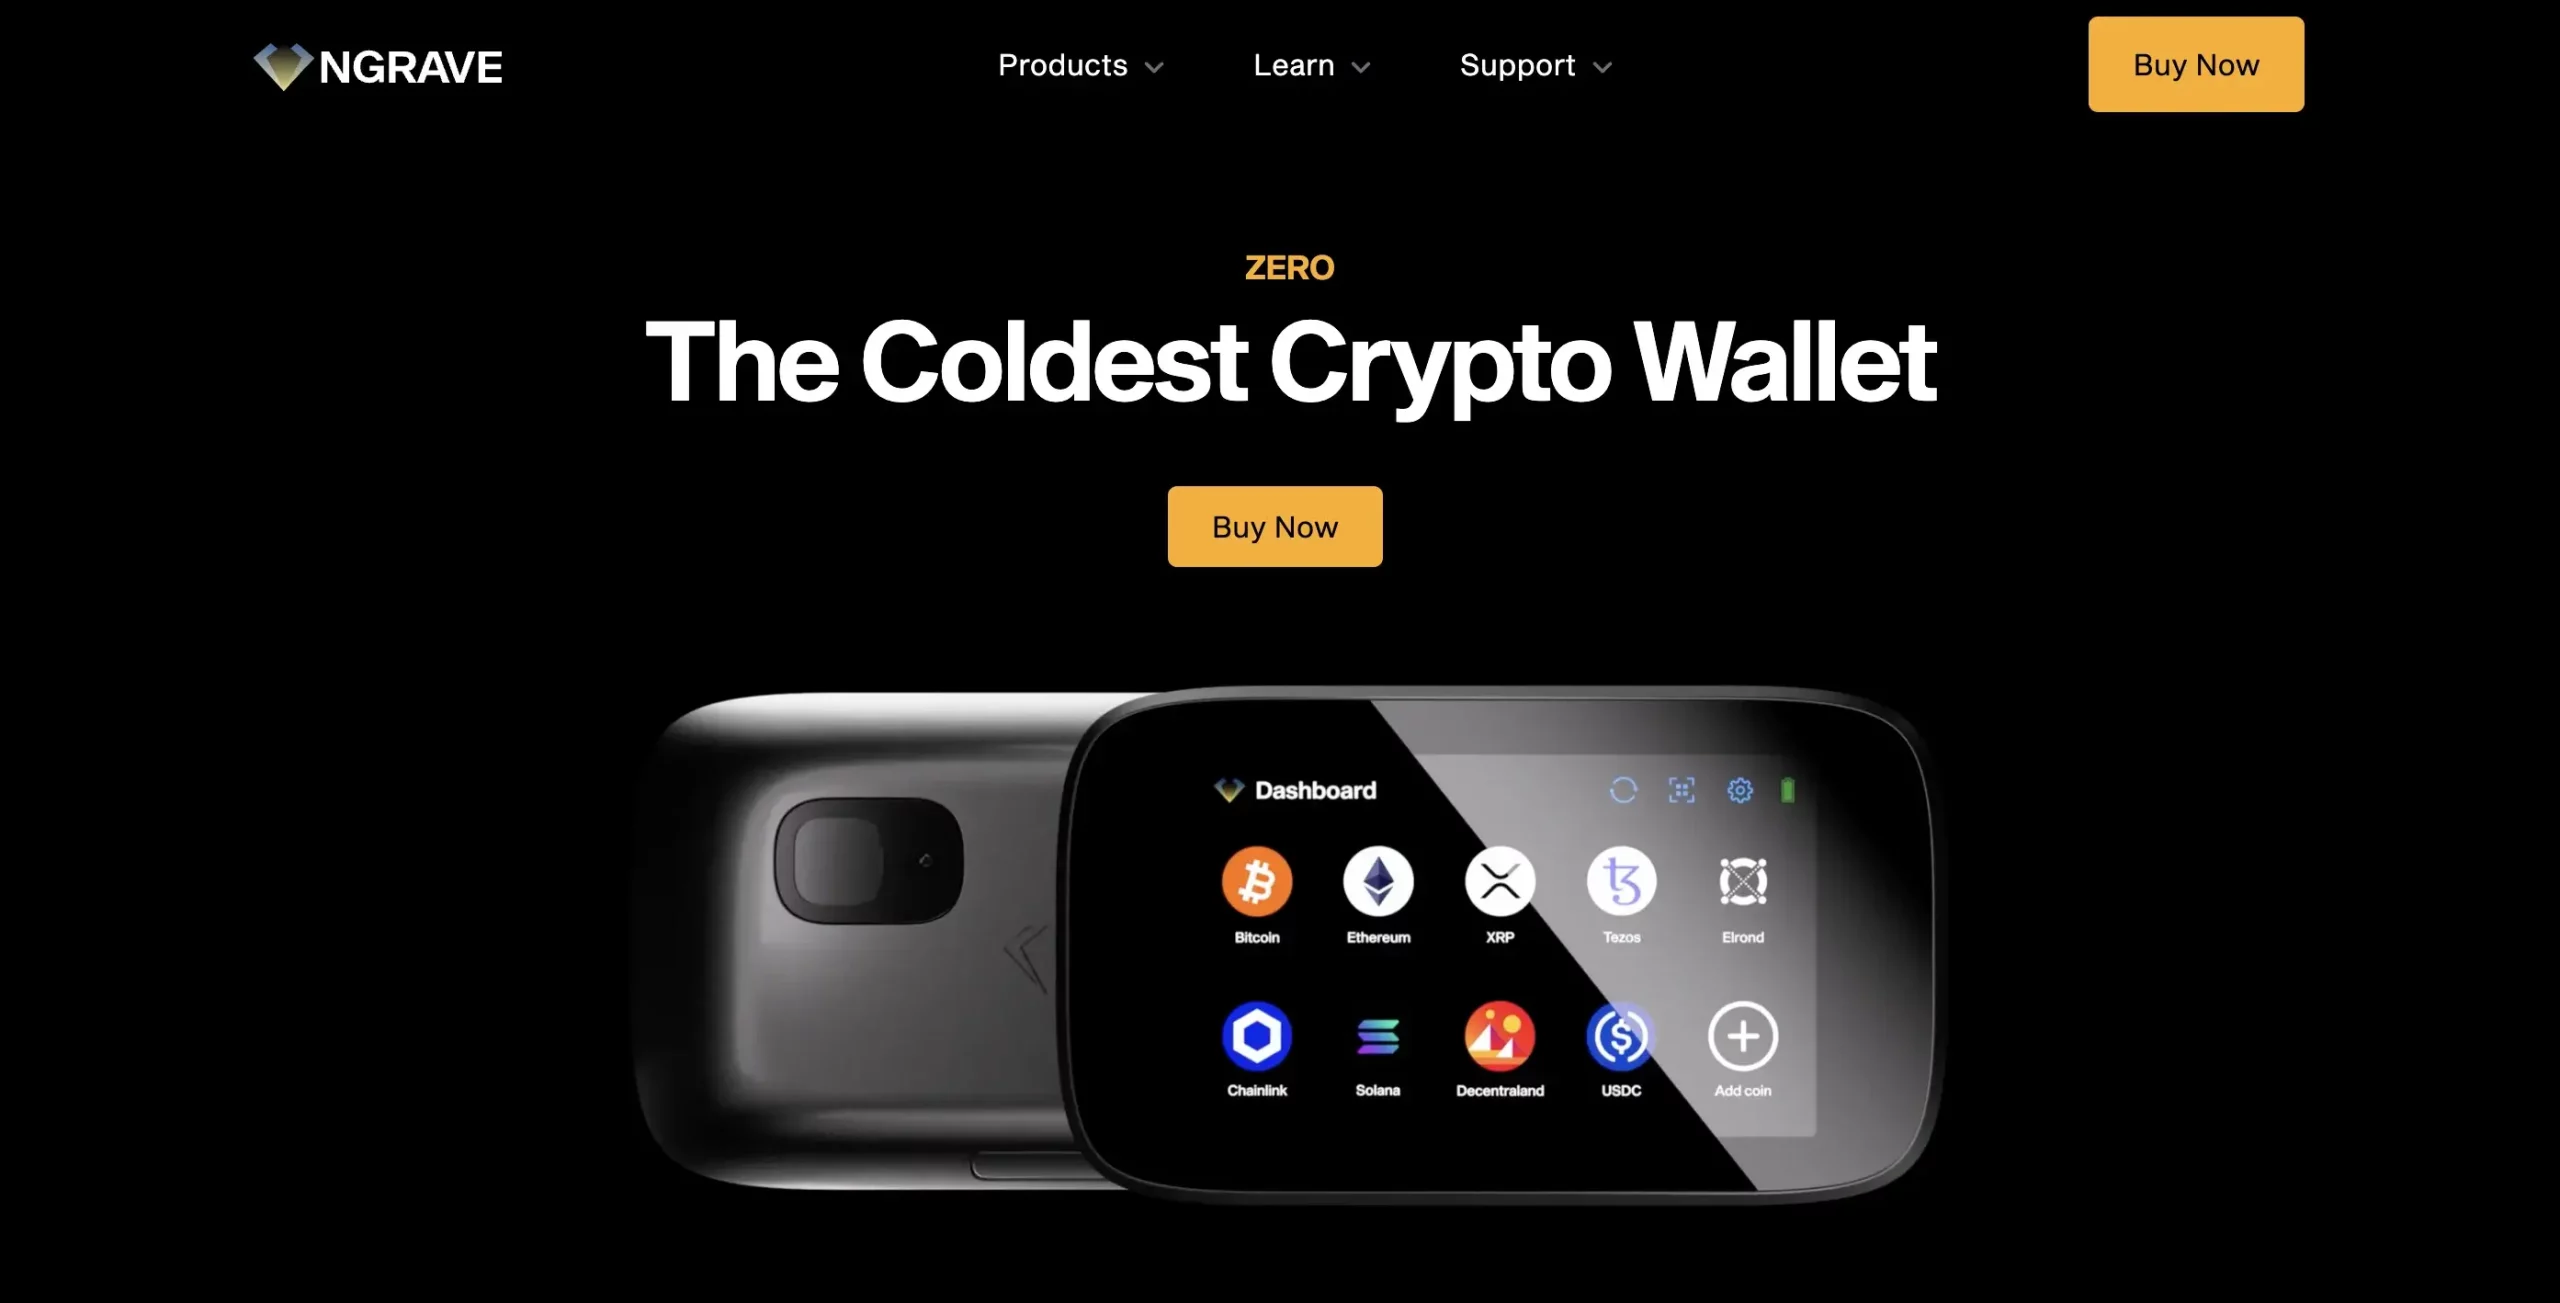 15. Ngrave Zero - The Coldest Crypto Wallet